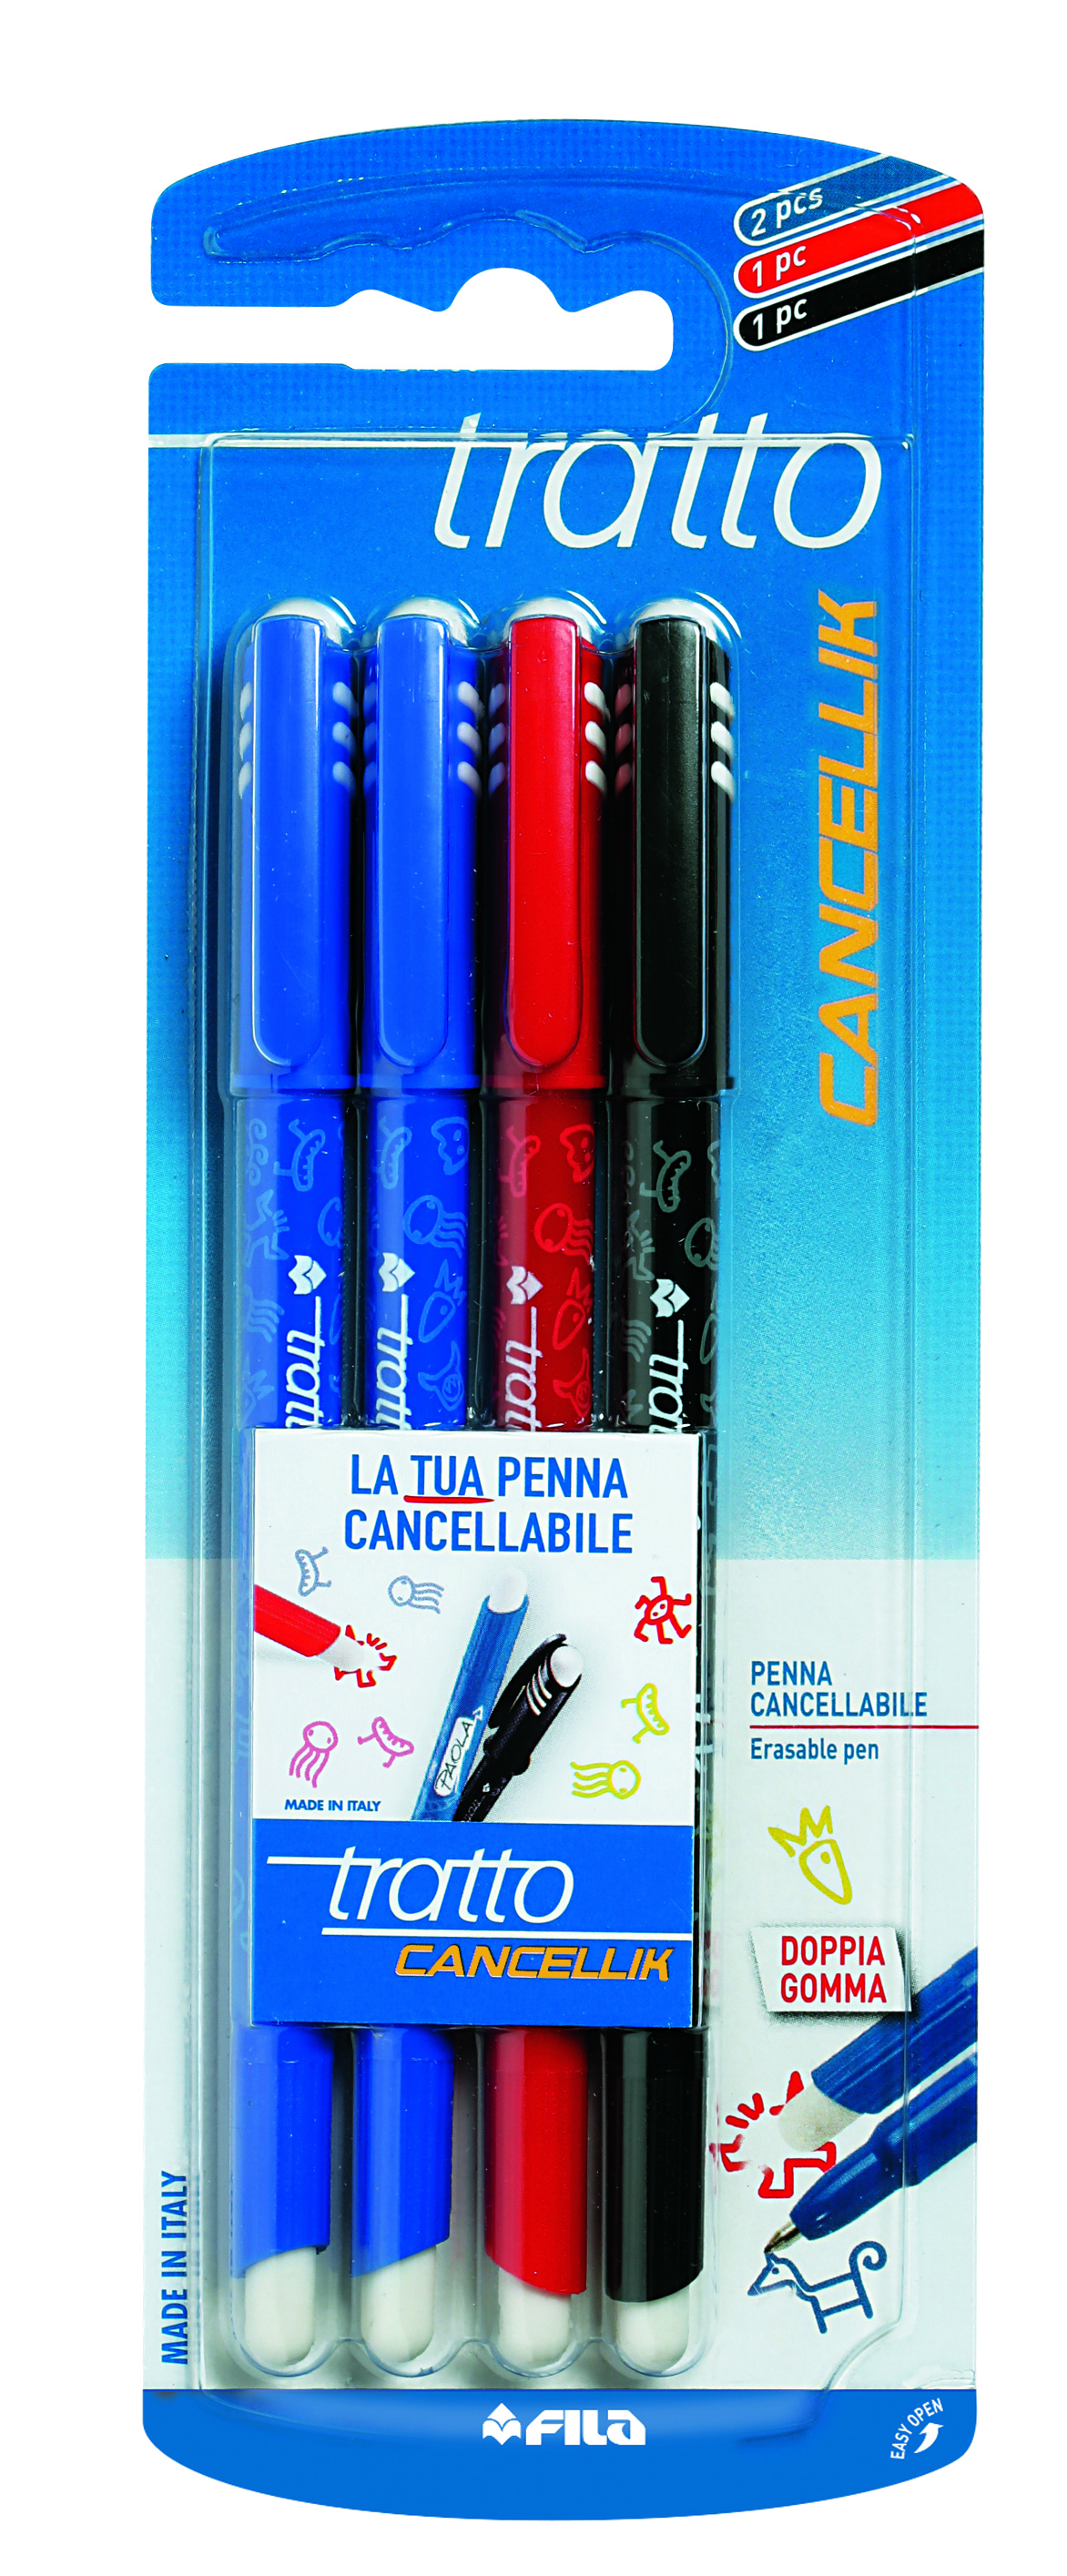 FILA 4 penne cancellabili tratto cancellik